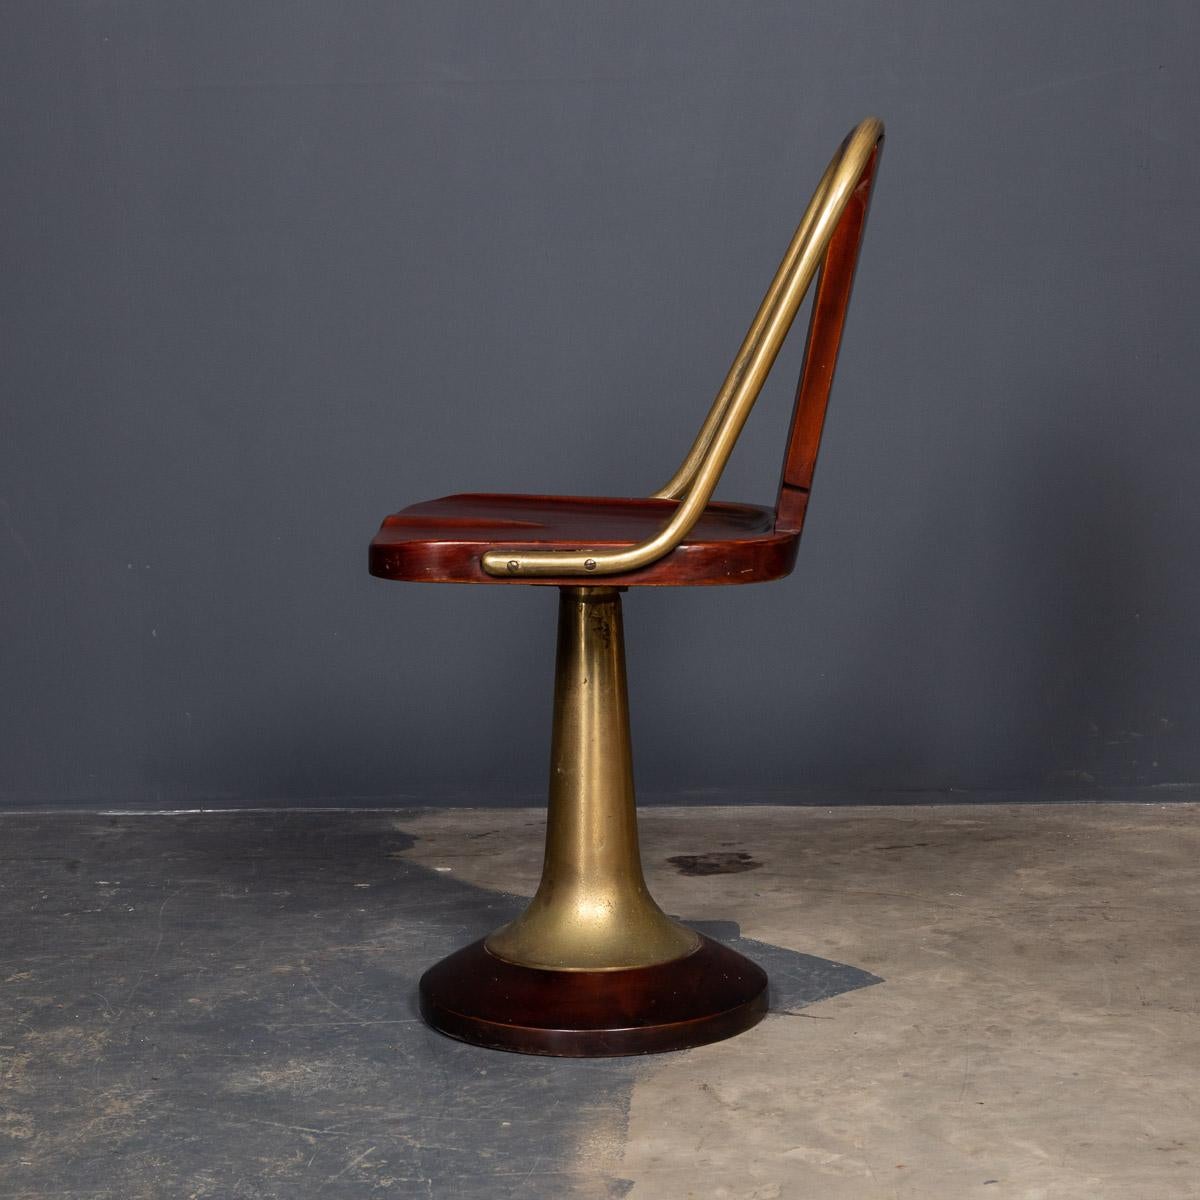 Turned 20th Century Art Deco Six Mahogany & Brass Swivel Chairs, Giuseppe Verdi c.1915